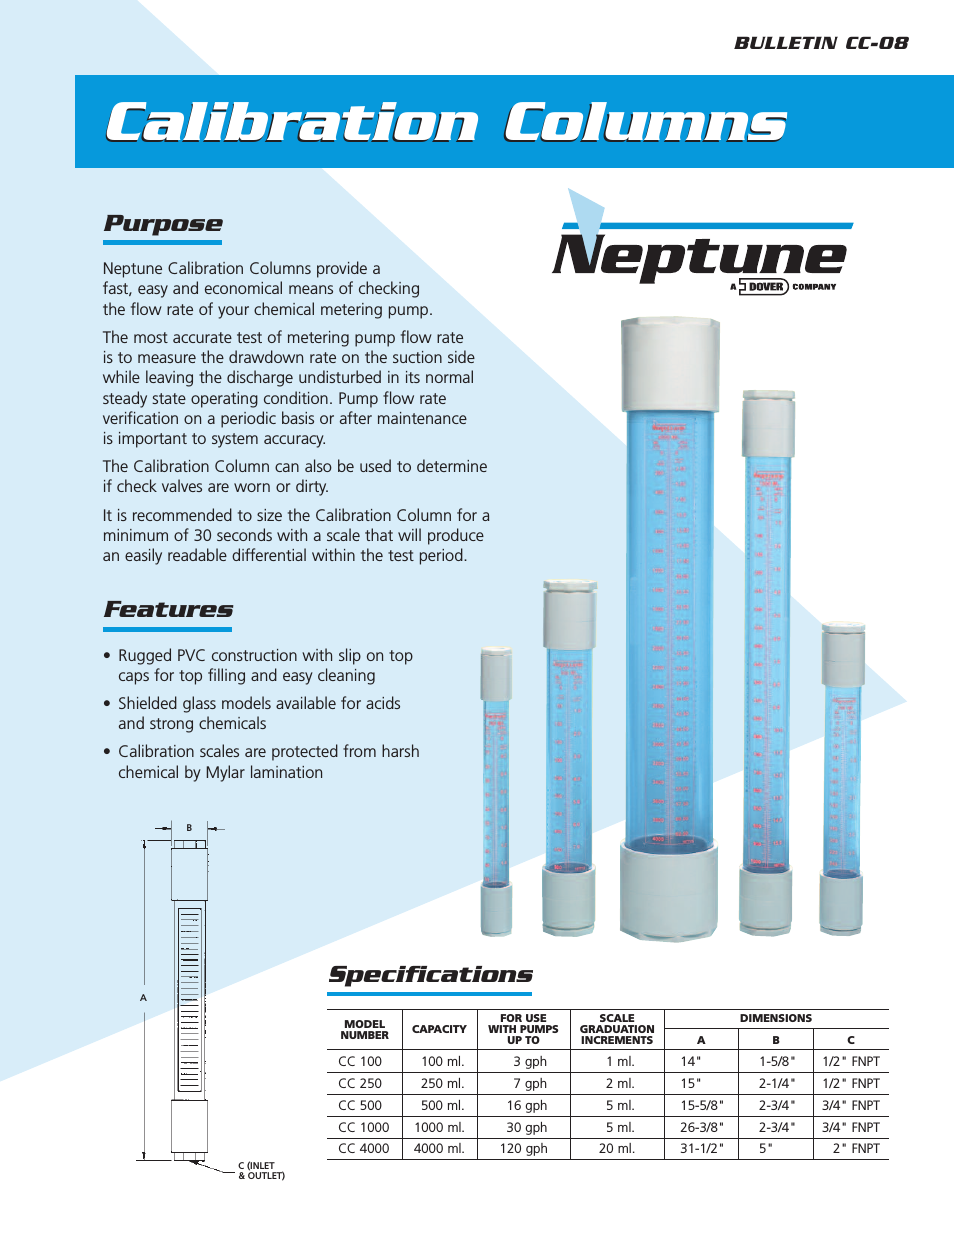 Neptune Calibration Columns